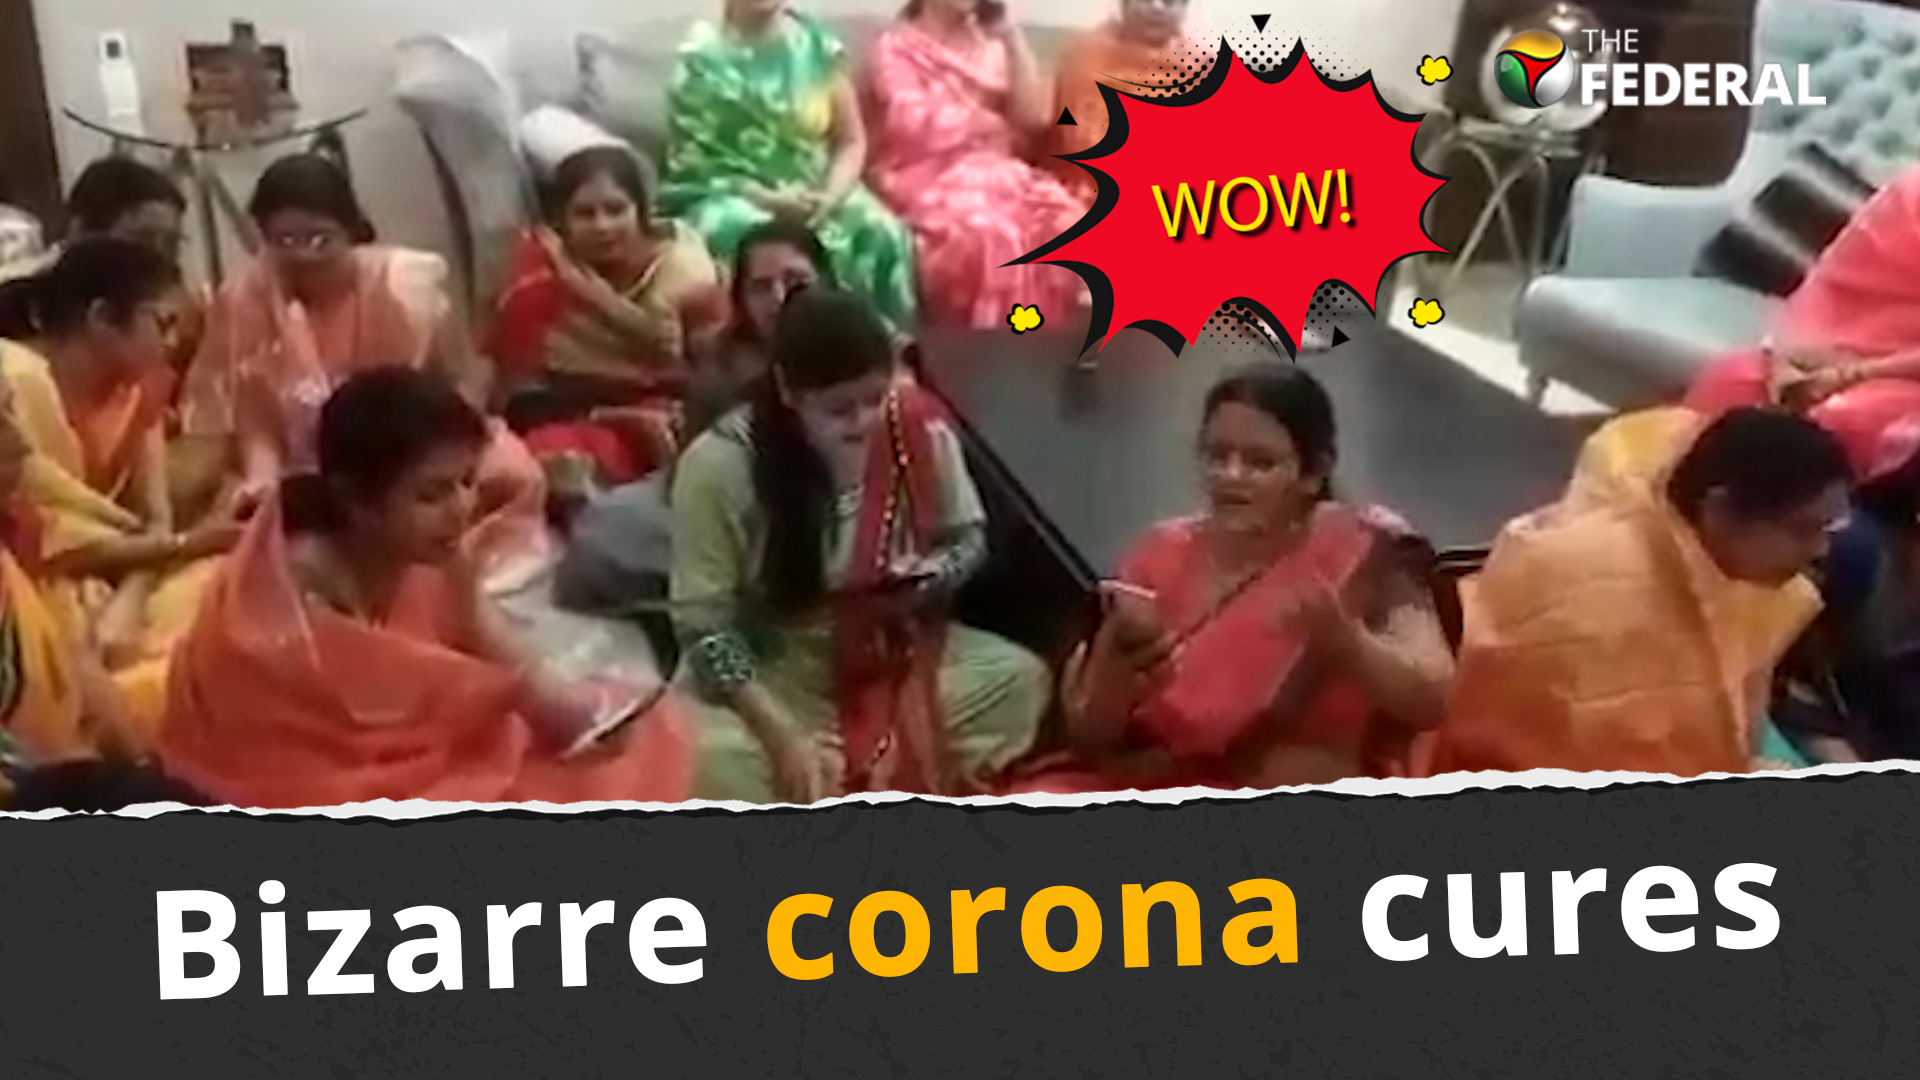 Bizarre corona cures: Shoo virus, sing bhajans, hail cow